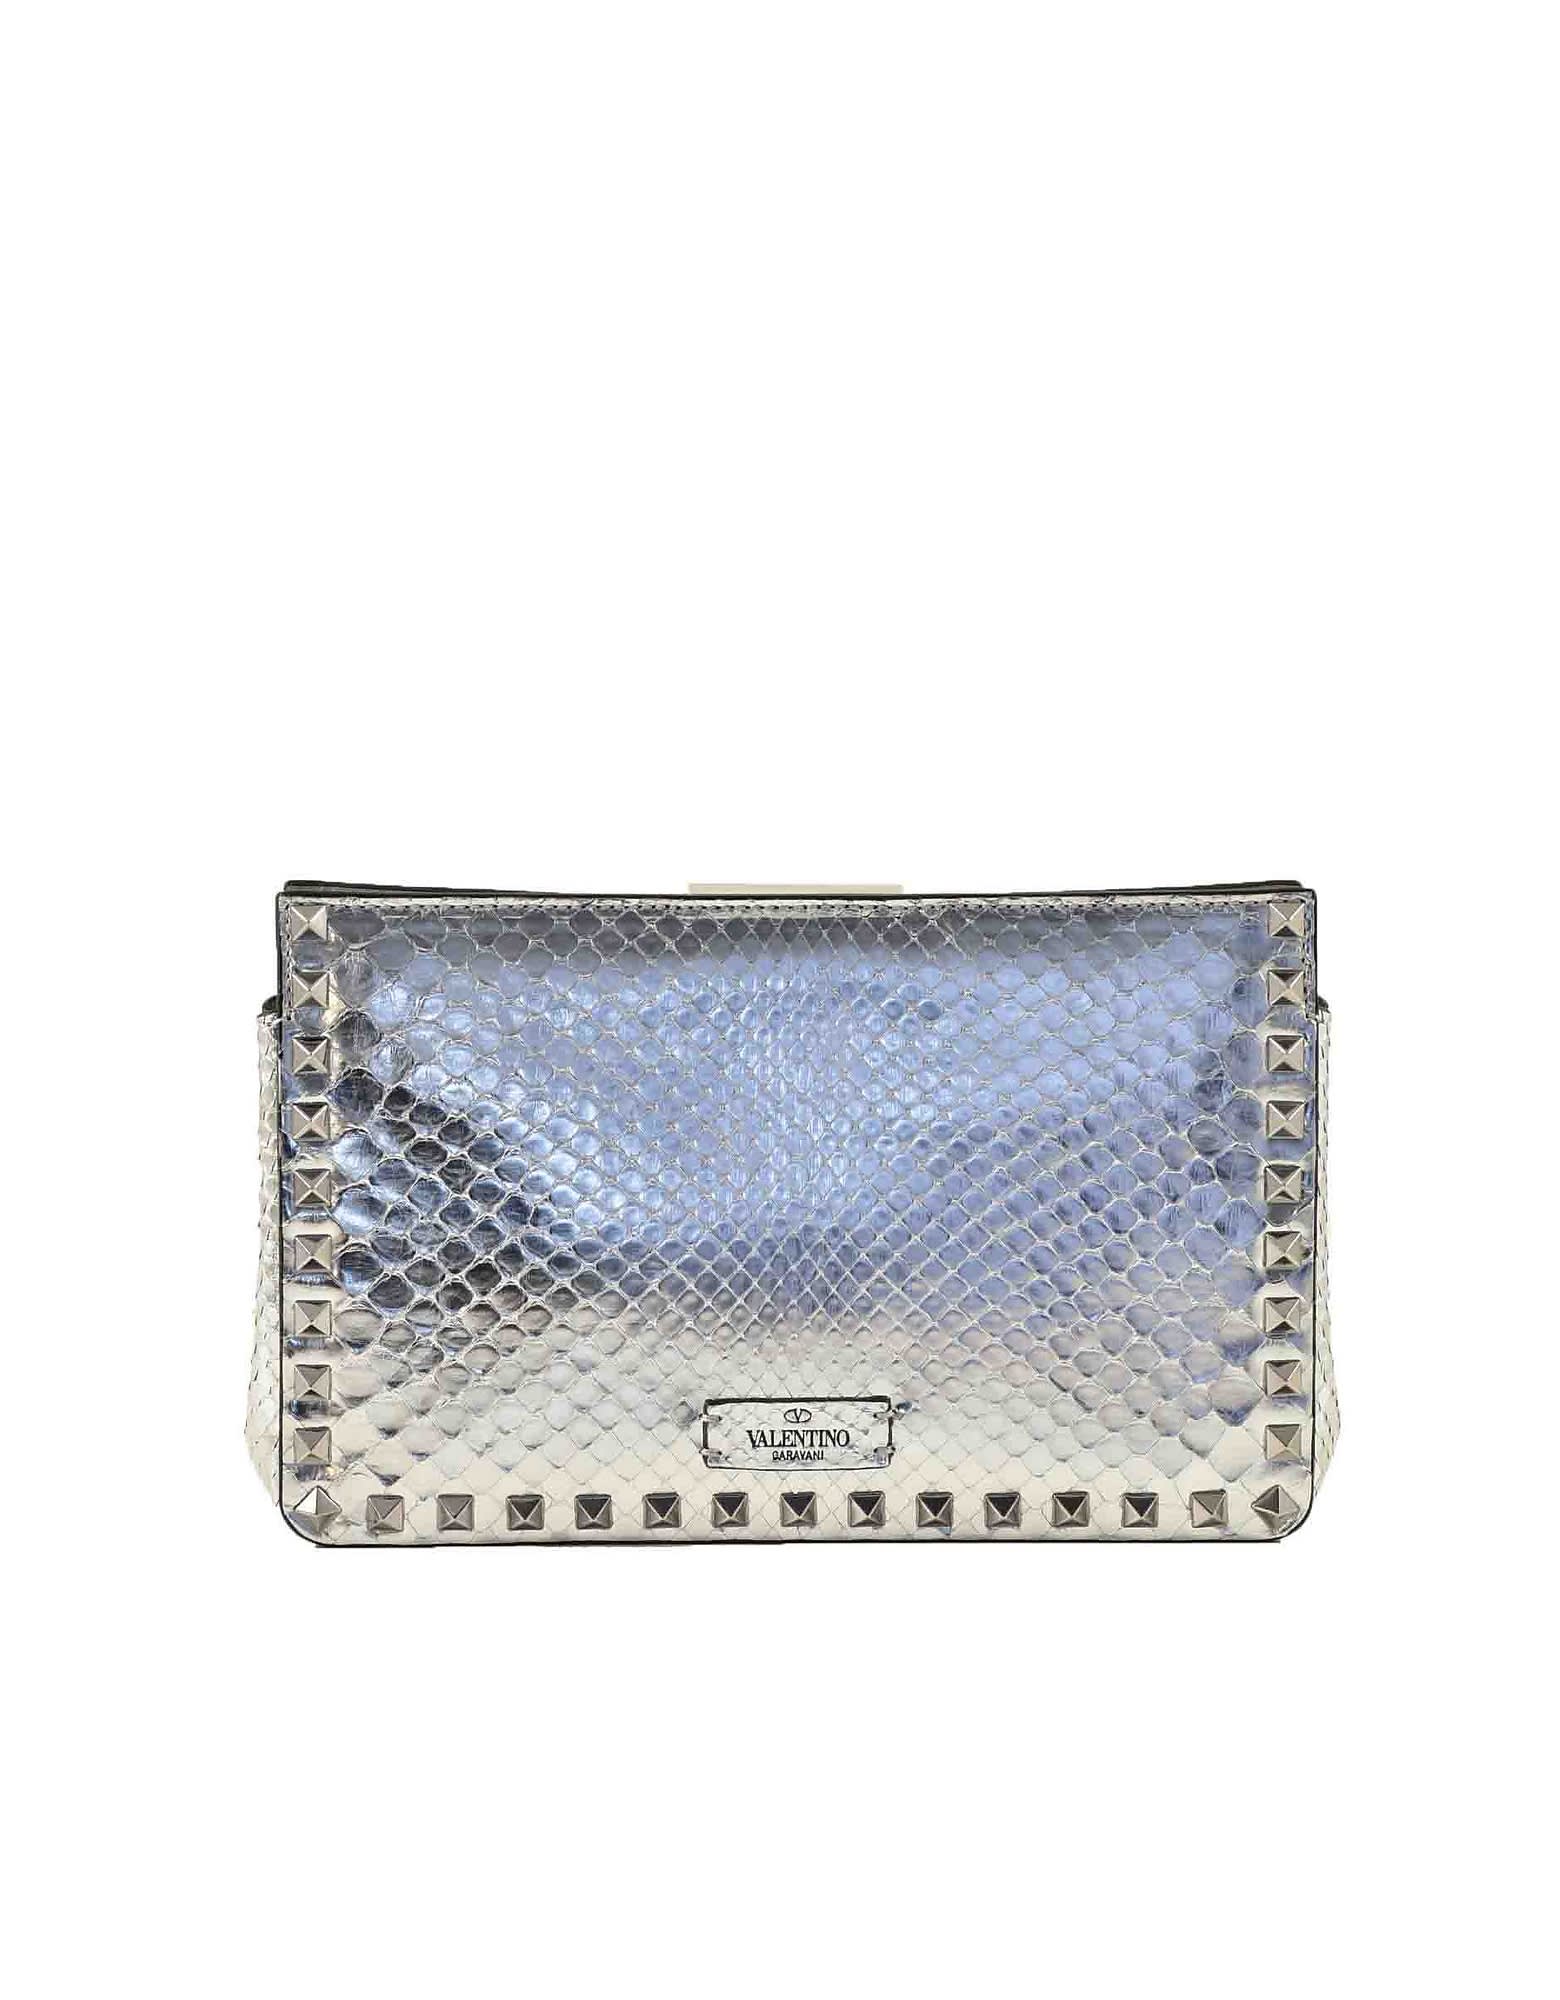 Valentino Womens Silver Handbag